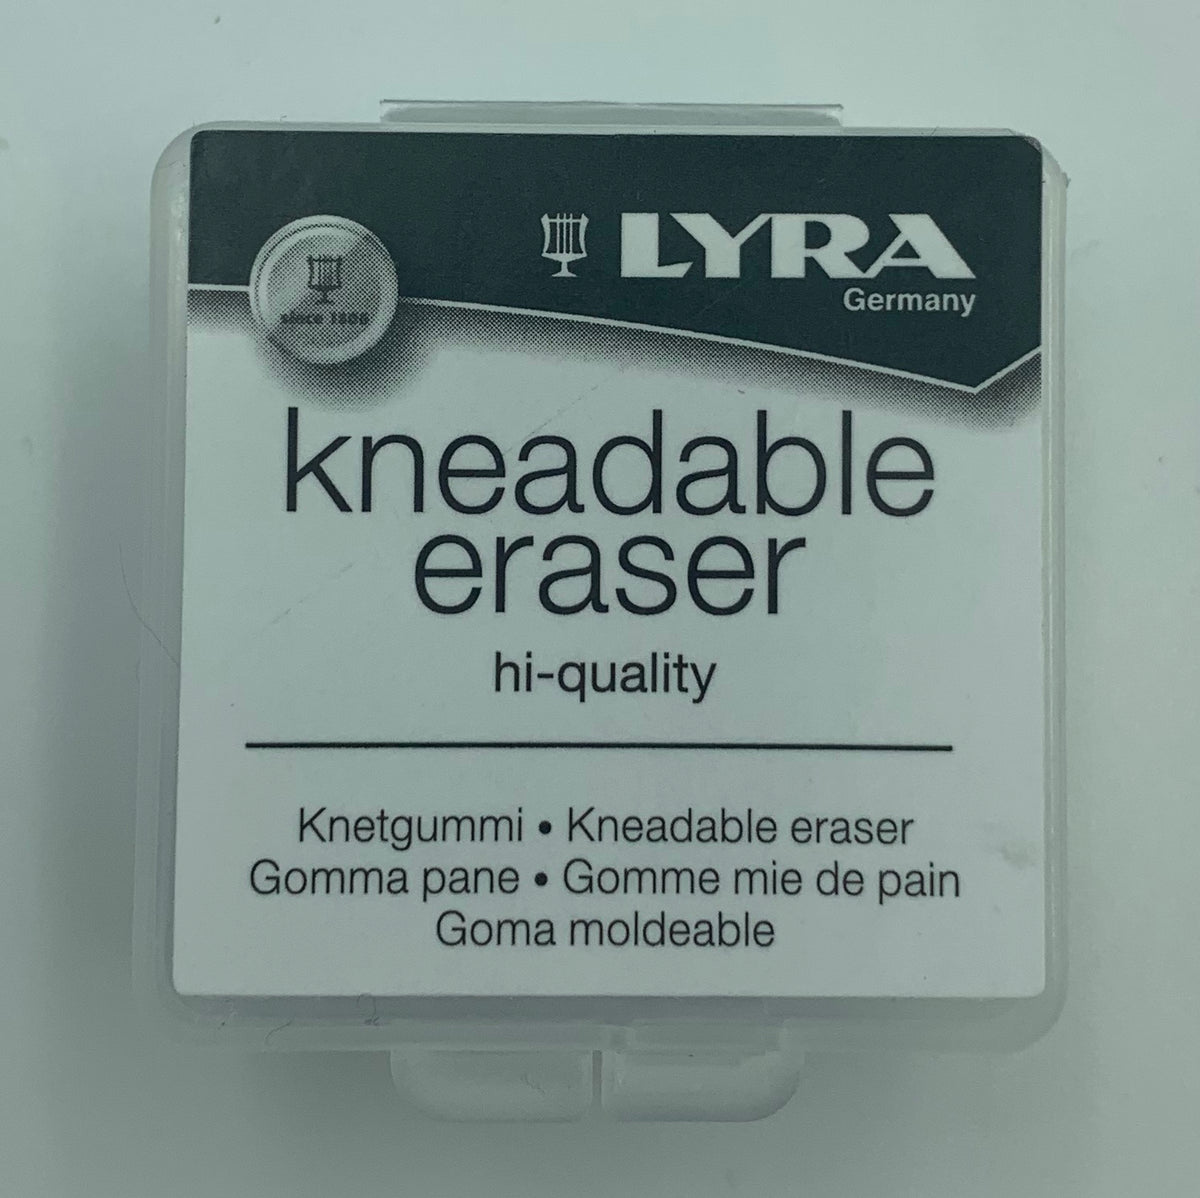 Lyra : Kneadable Eraser - Lyra - Brands